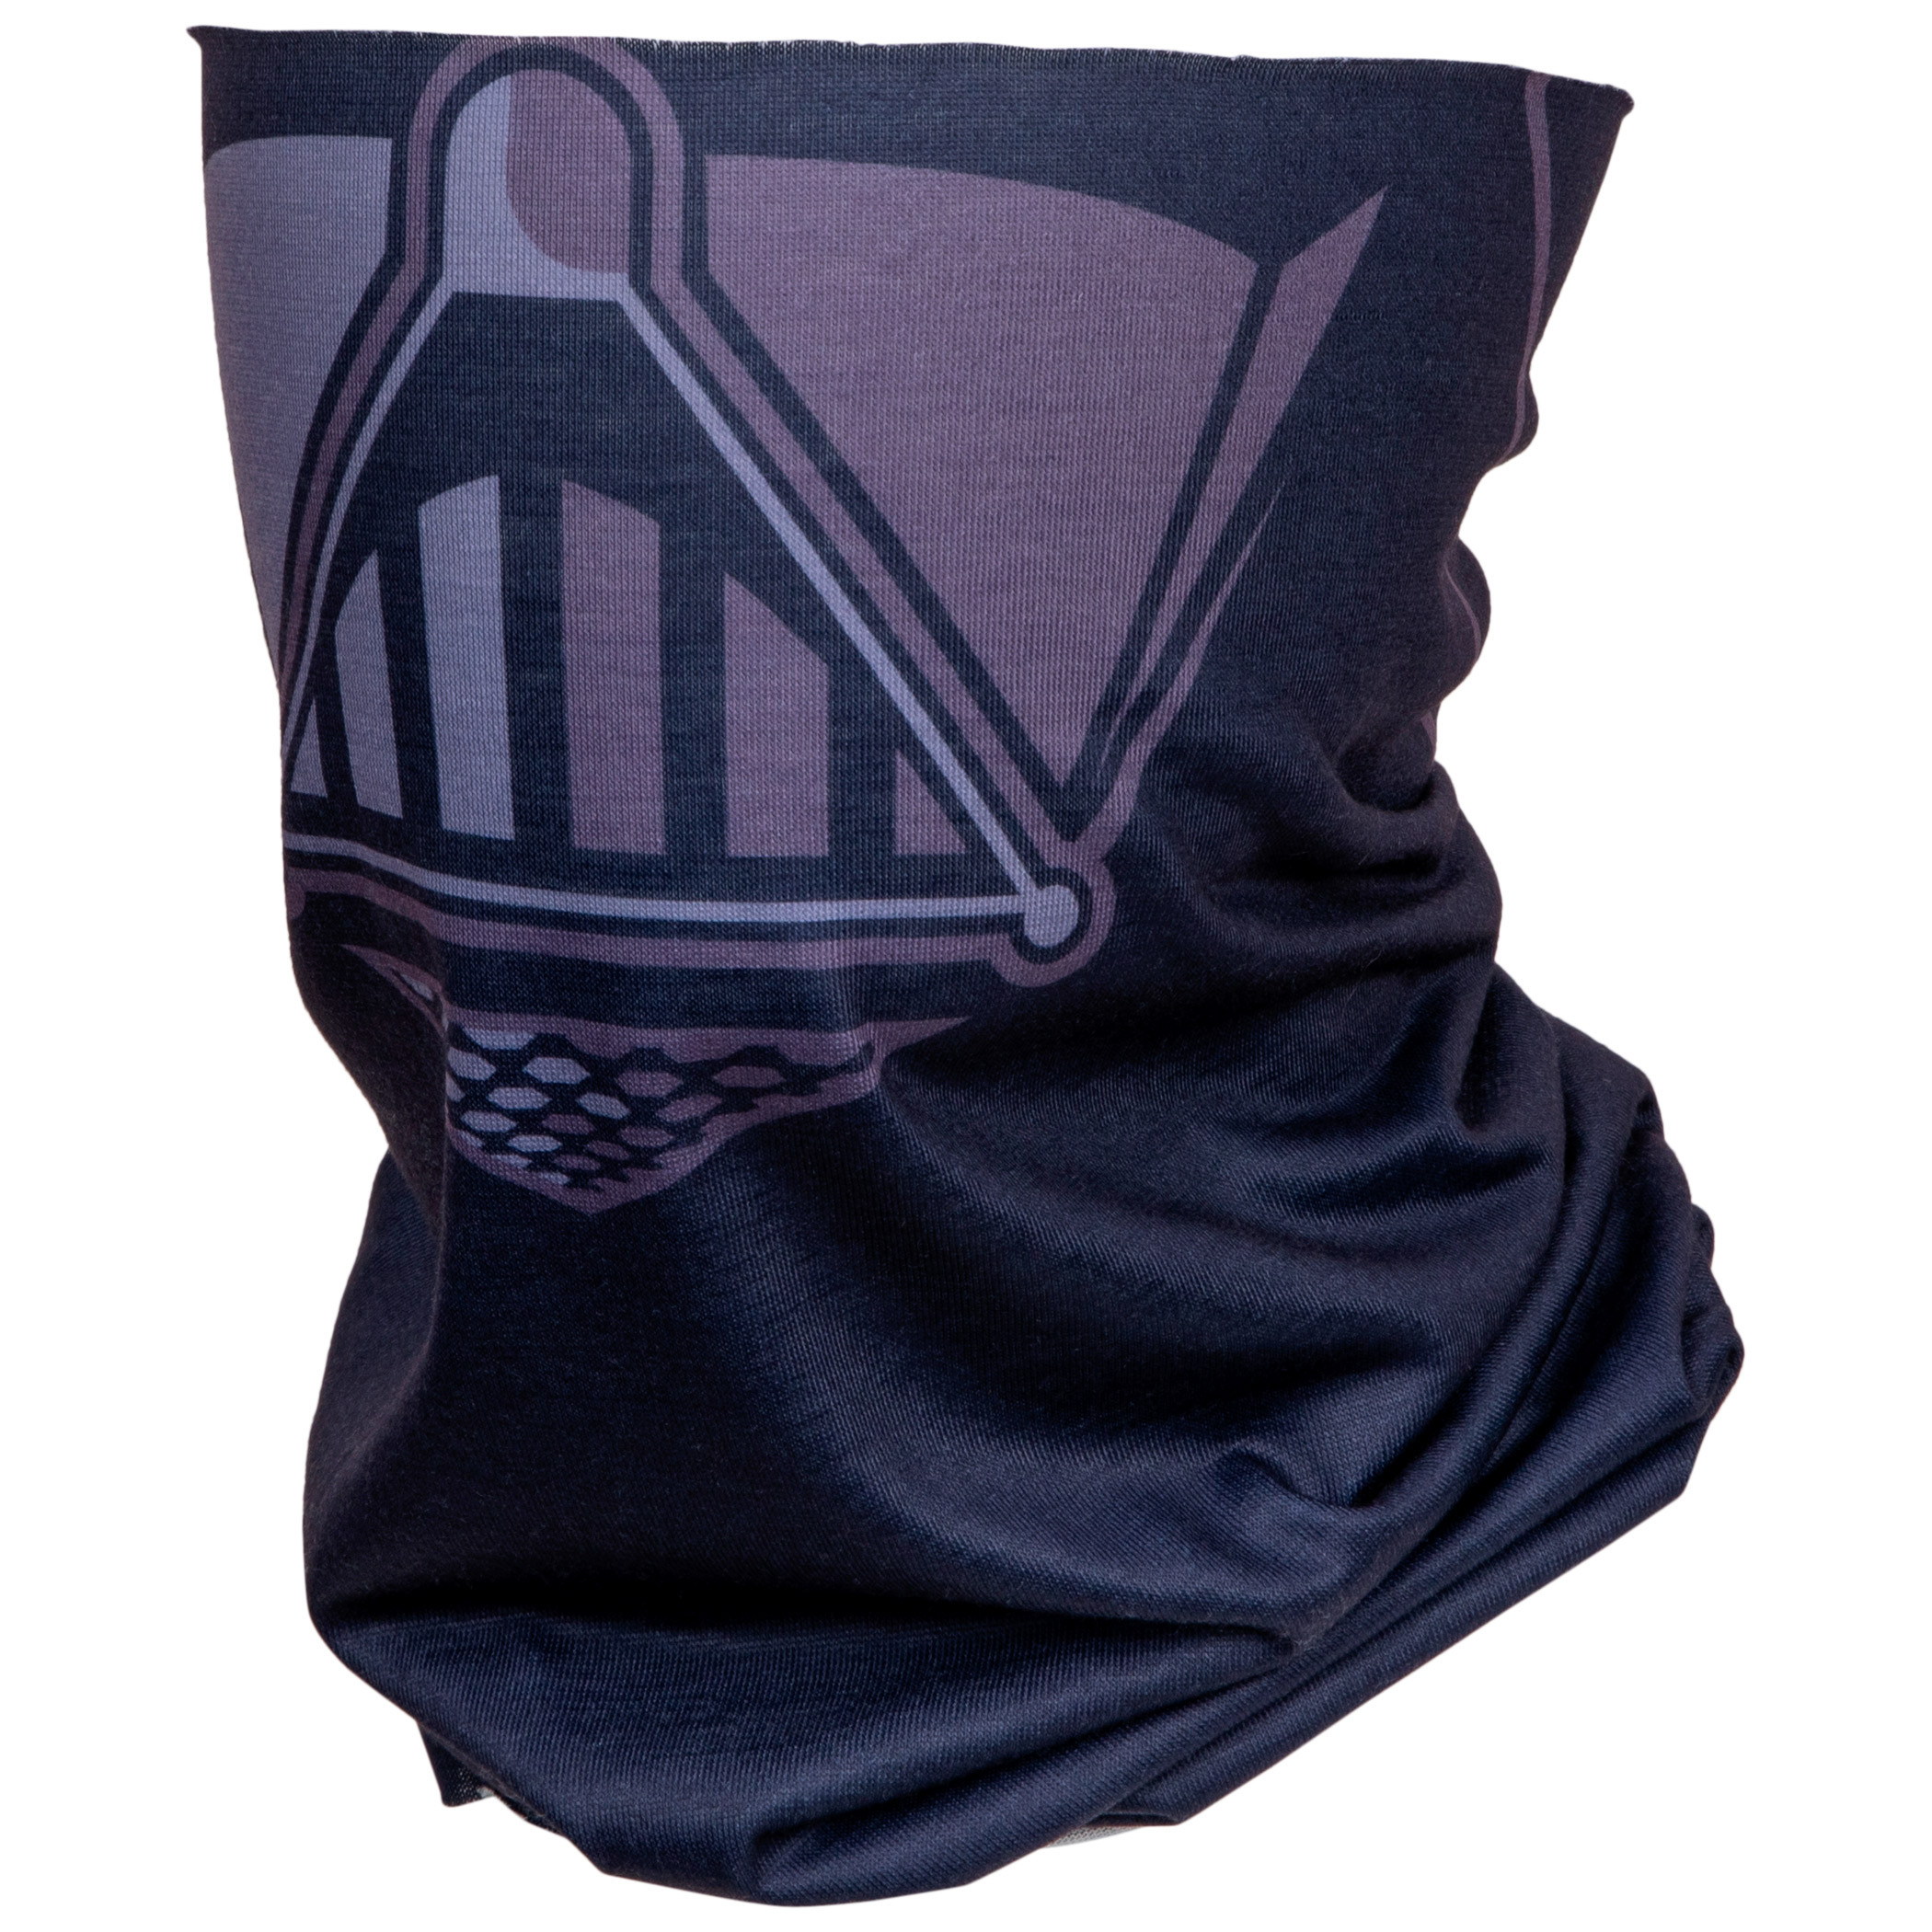 Star Wars Darth Vader Costume Mask Full Face Tubular Bandana Gaiter